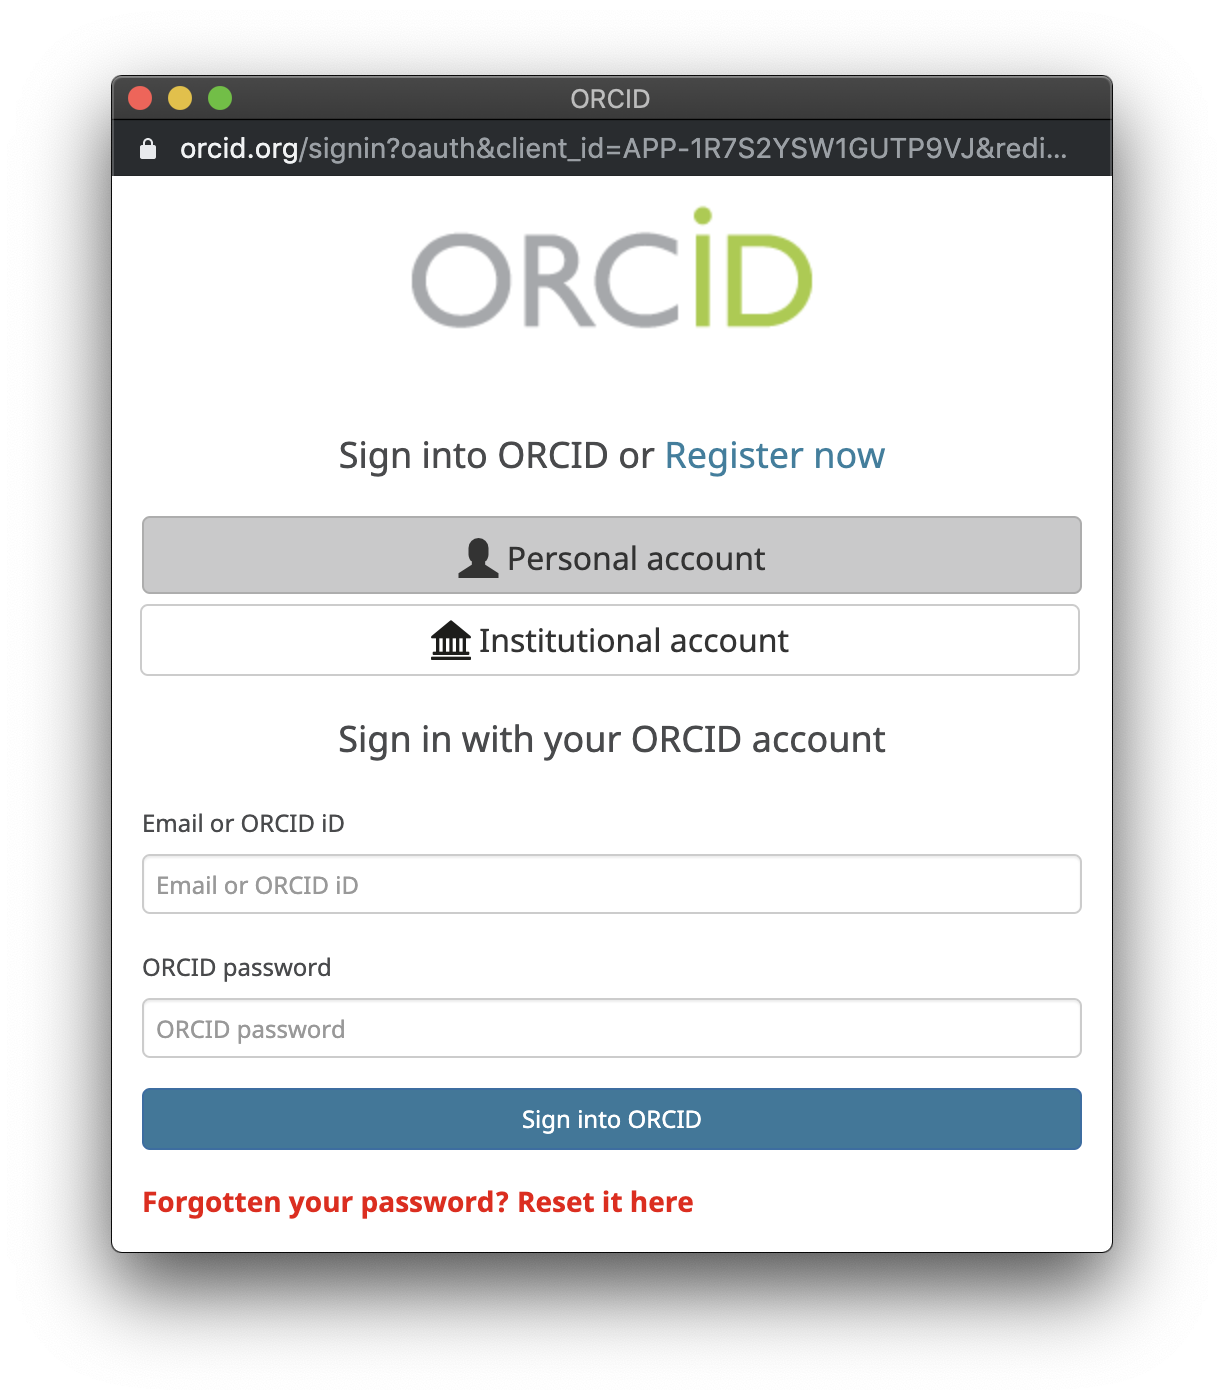 The ORCID login form